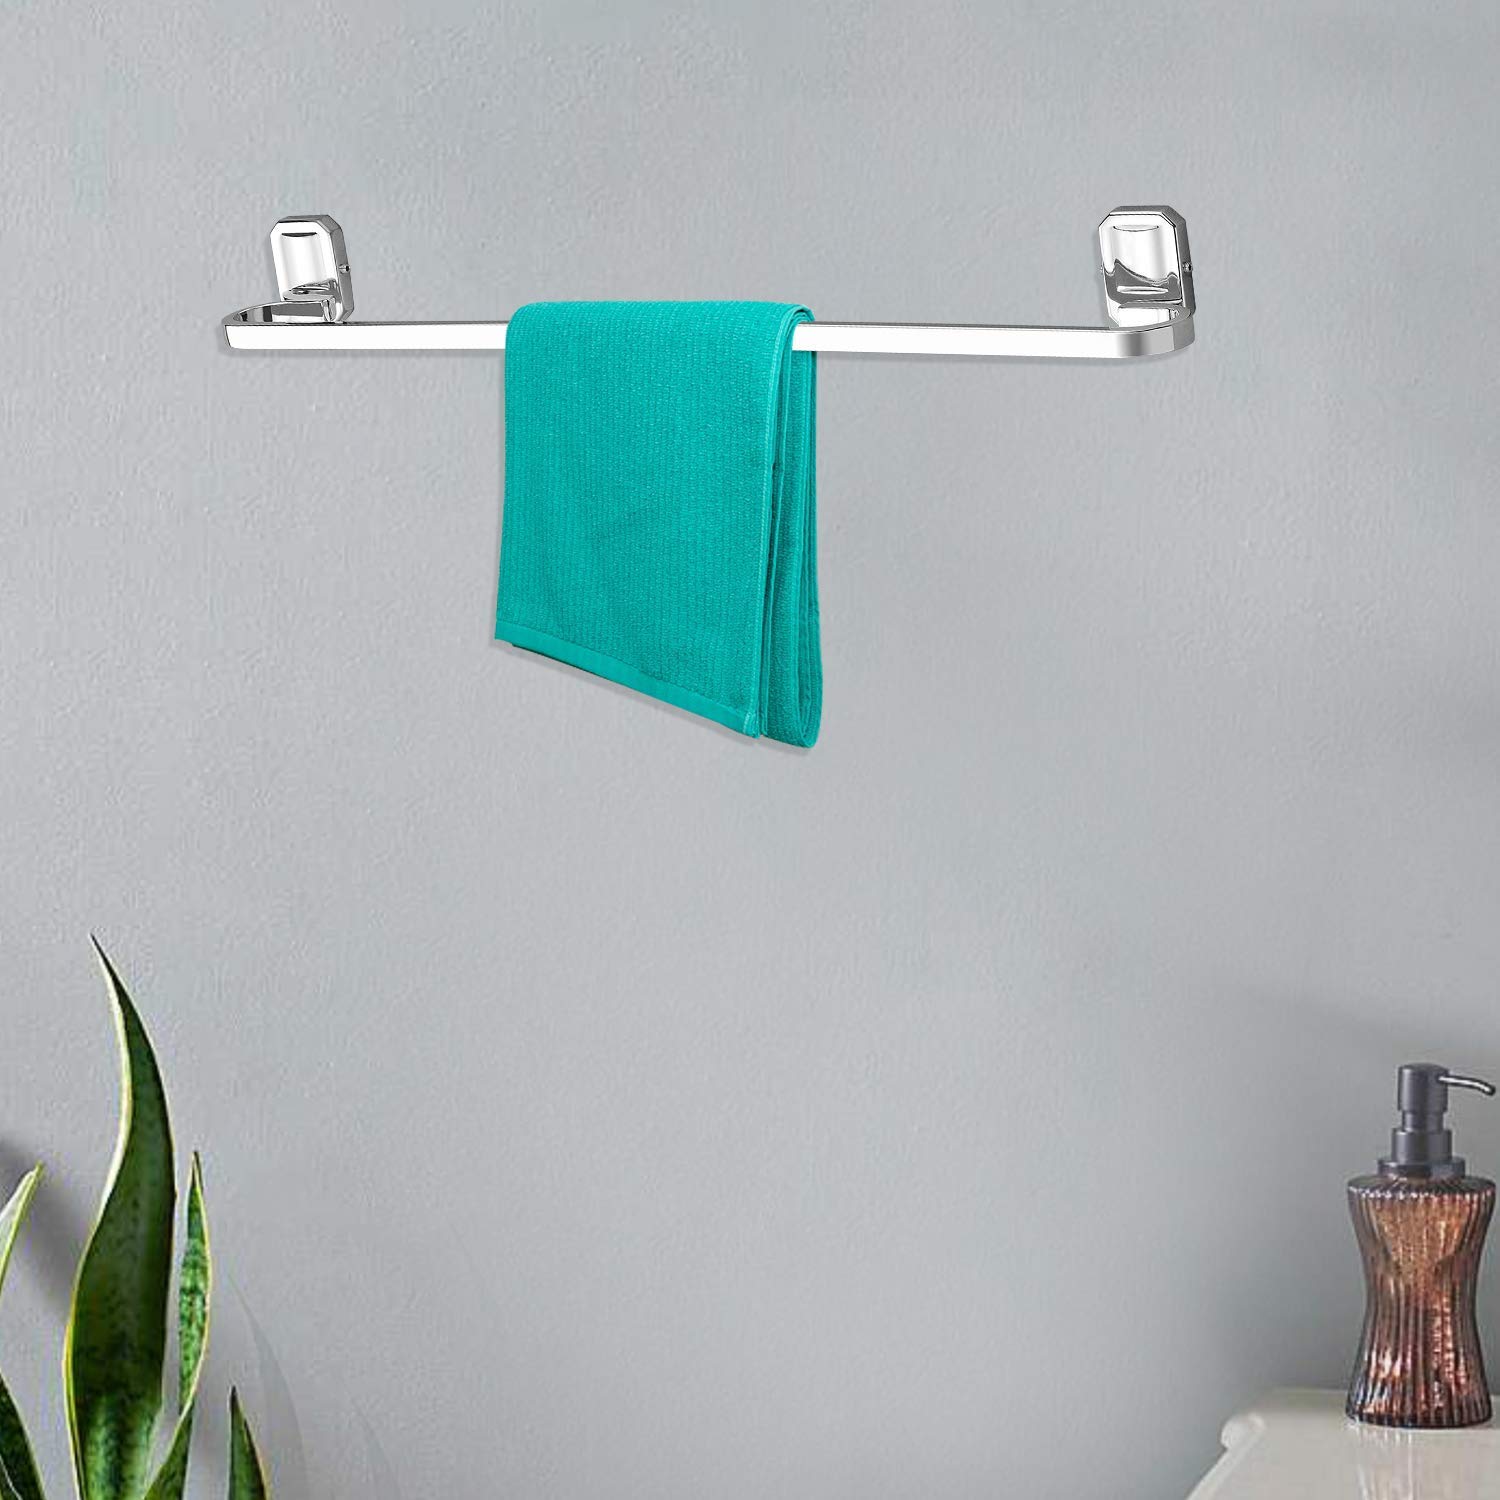 Plantex Stainless Steel 304 Grade Cute Towel Hanger for Bathroom/Towel Rod/Bar/Bathroom Accessories(24inch-Chrome) - Pack of 4